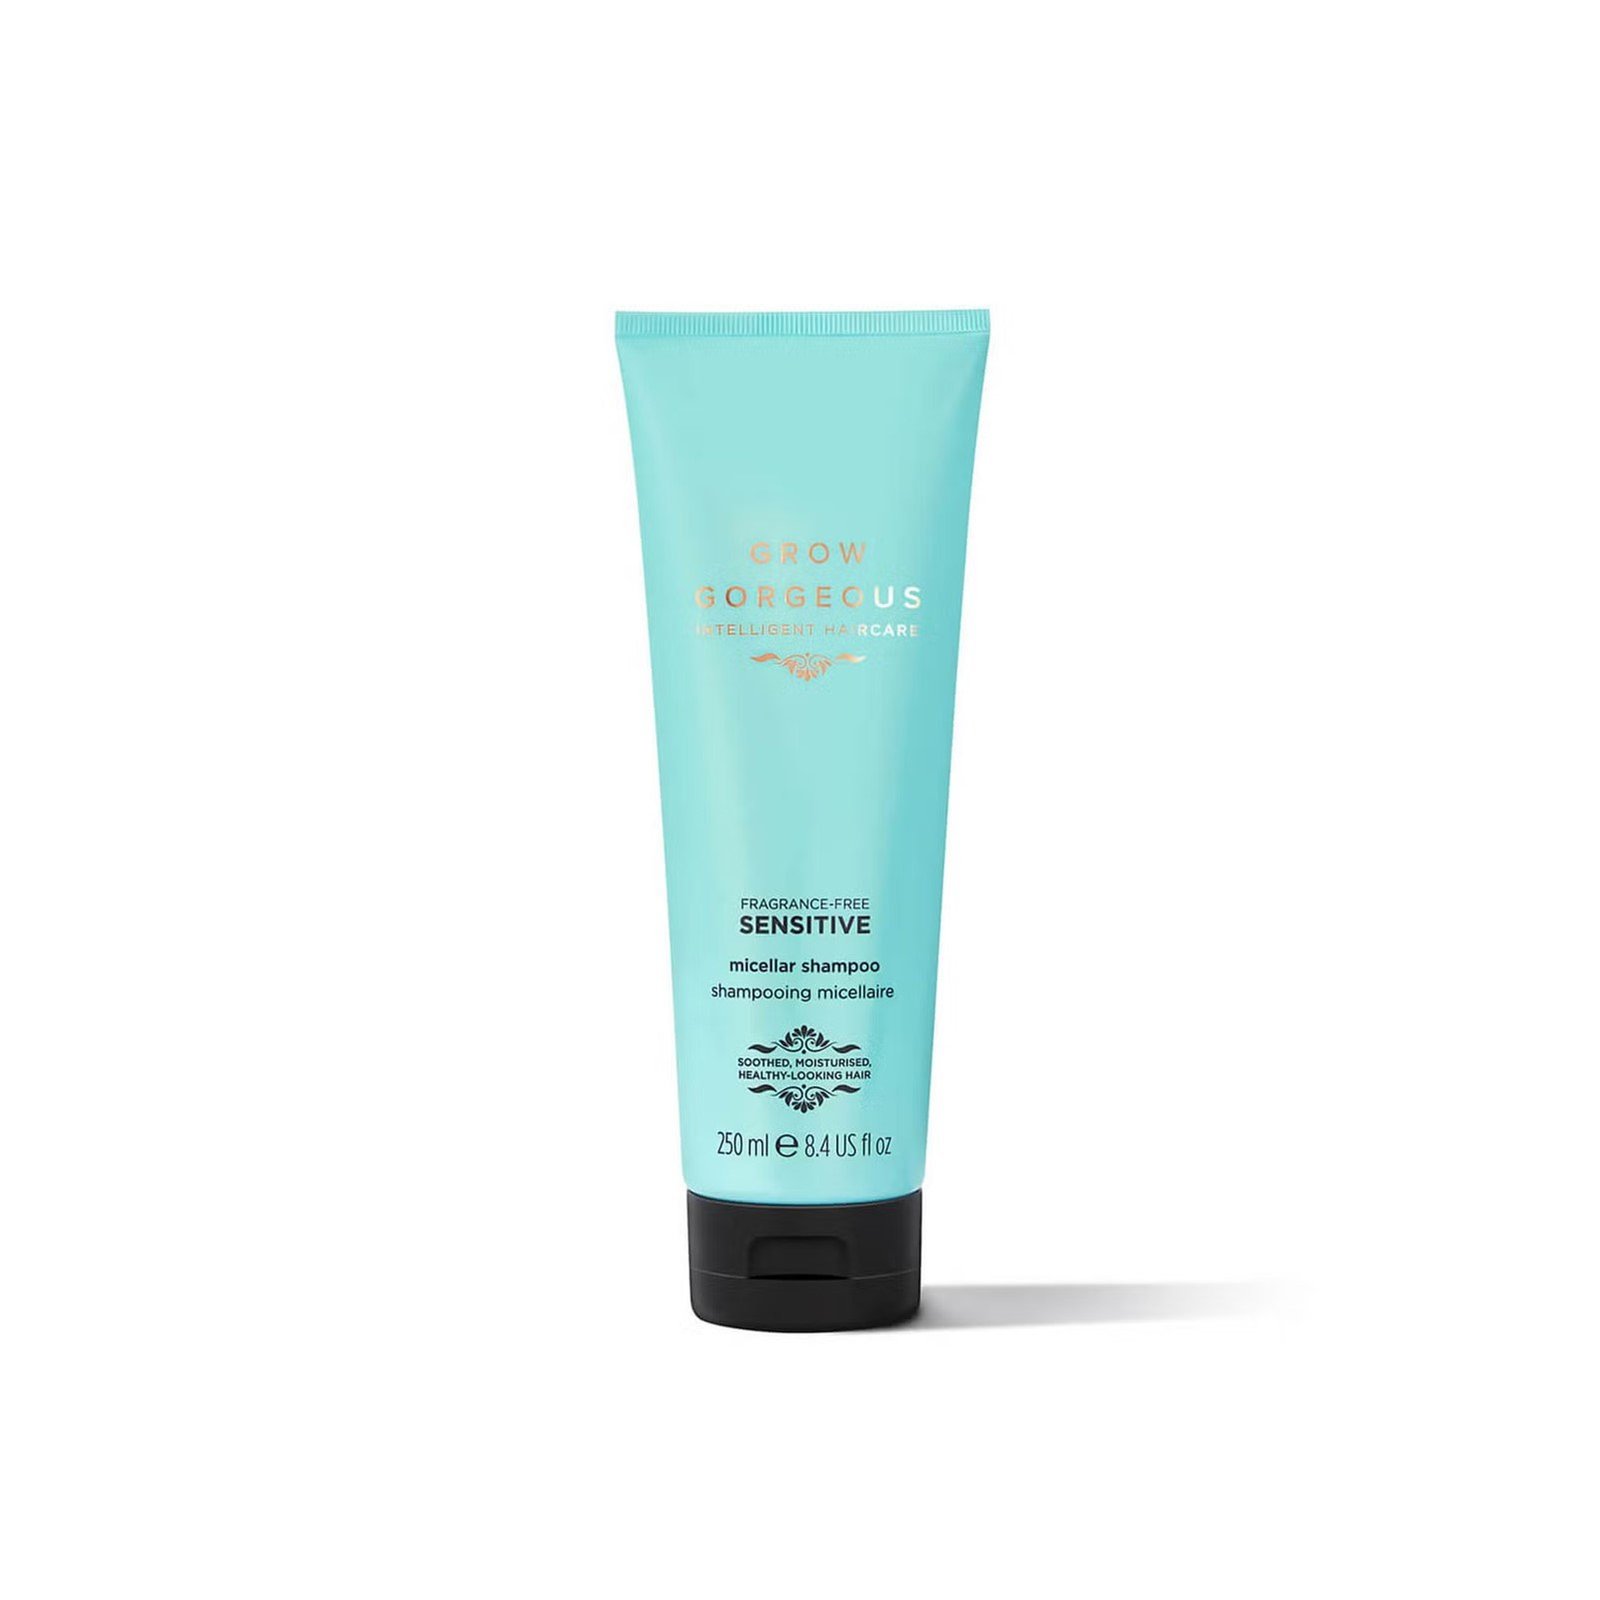 Grow Gorgeous Sensitive Micellar Shampoo 250ml (8.4 fl oz)